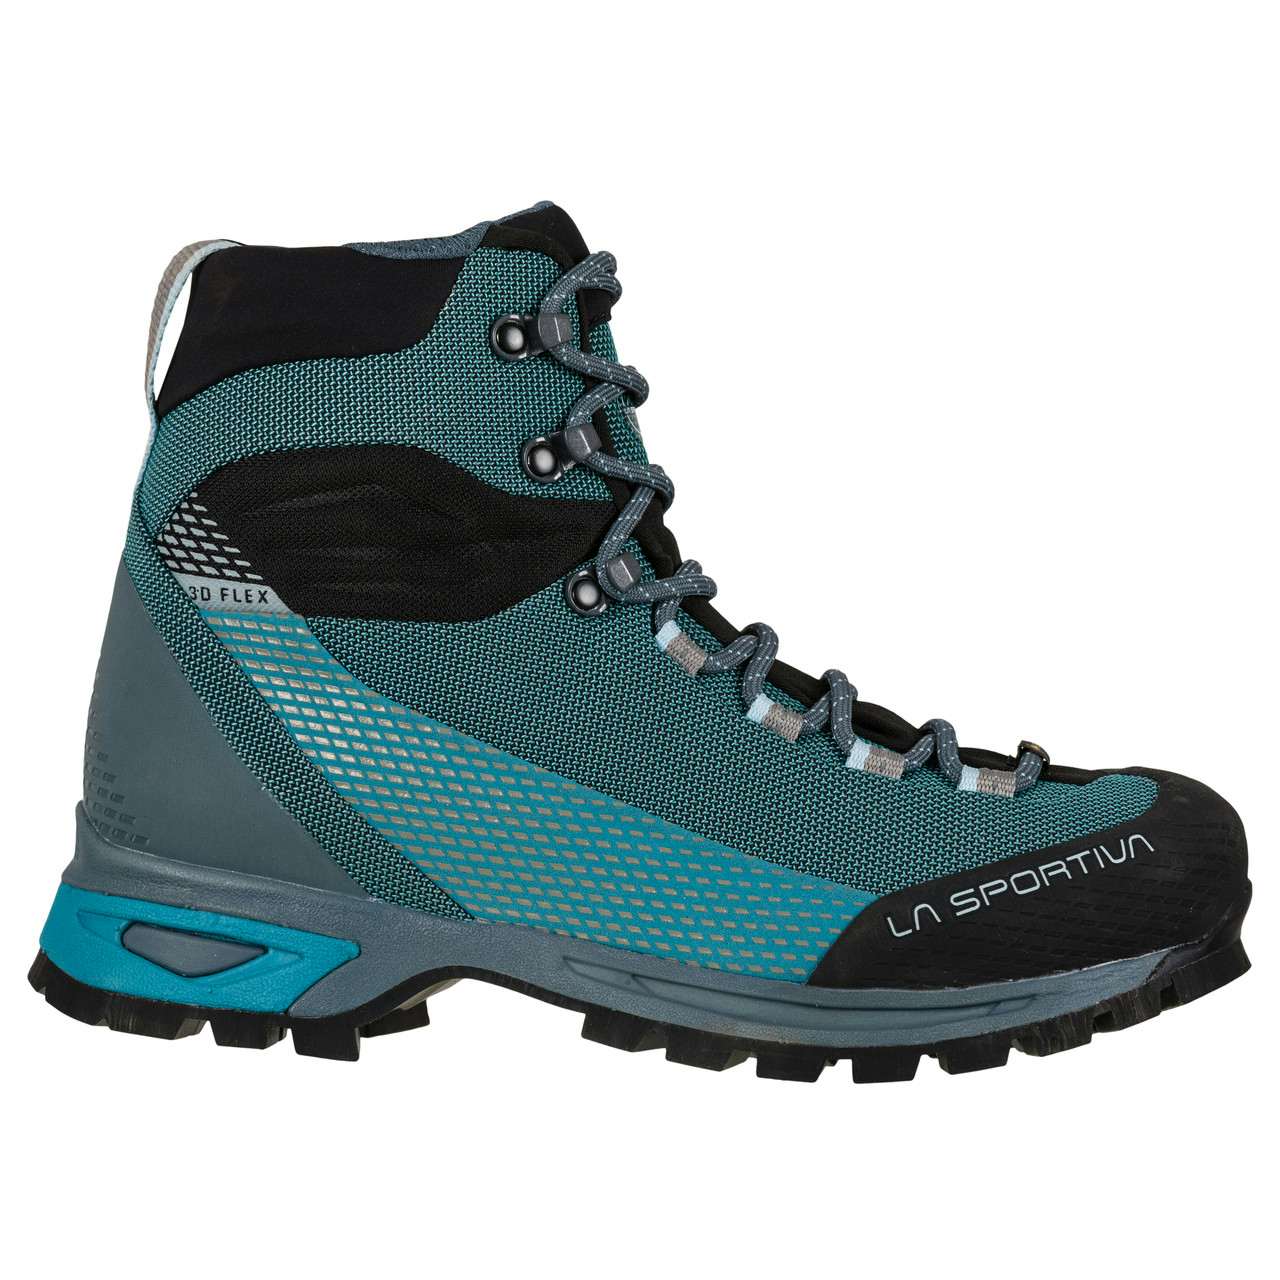 Chaussures de courte randonnée Trango TRK GTX Topaze/bleu céleste